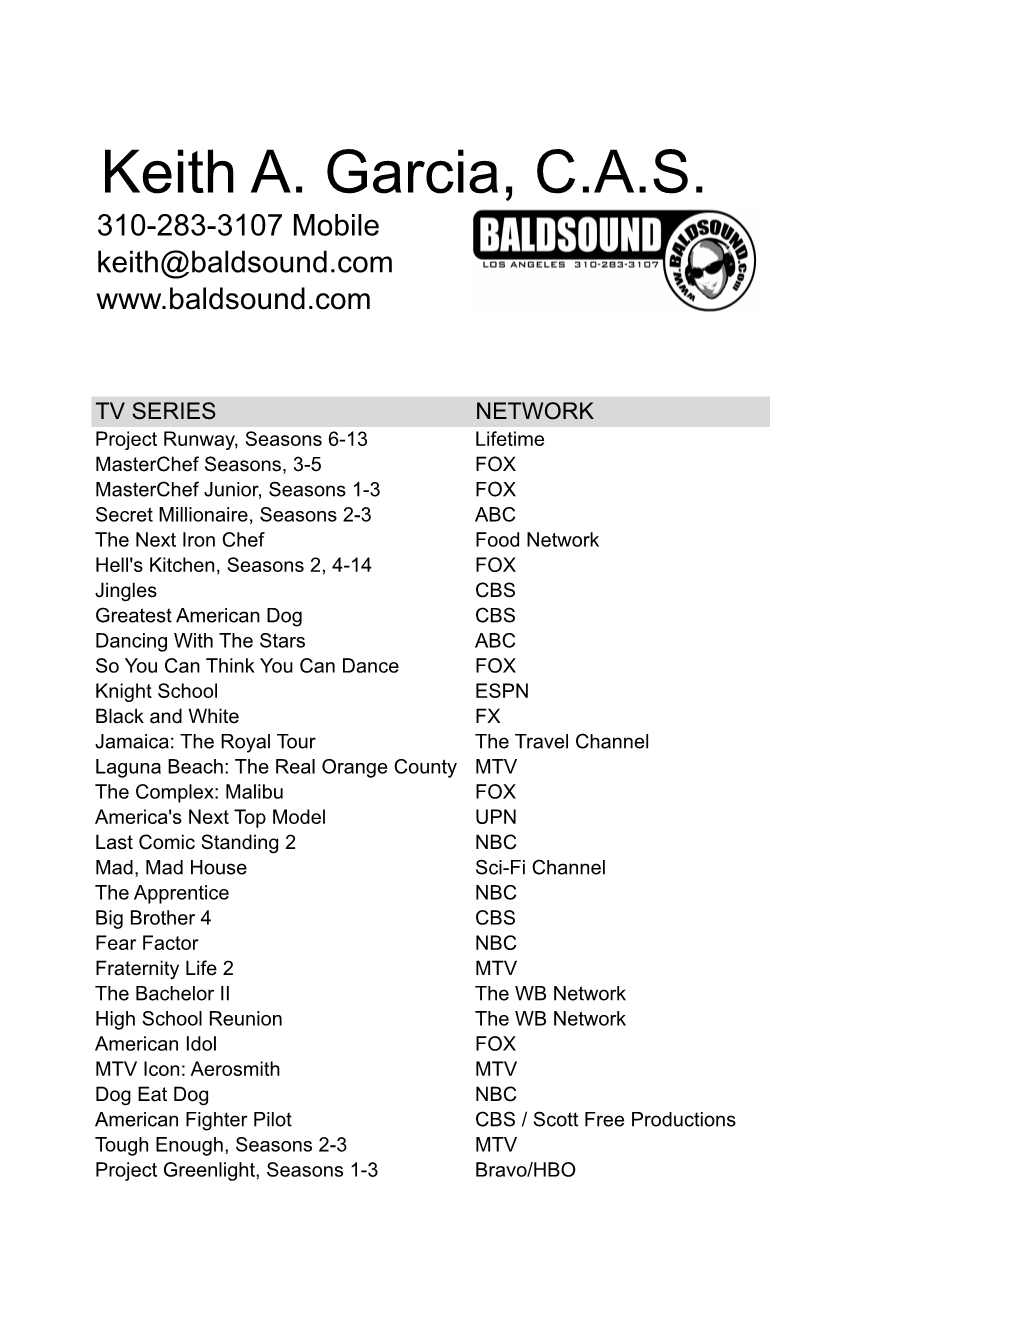 Keith Resume2 27.Xlsx